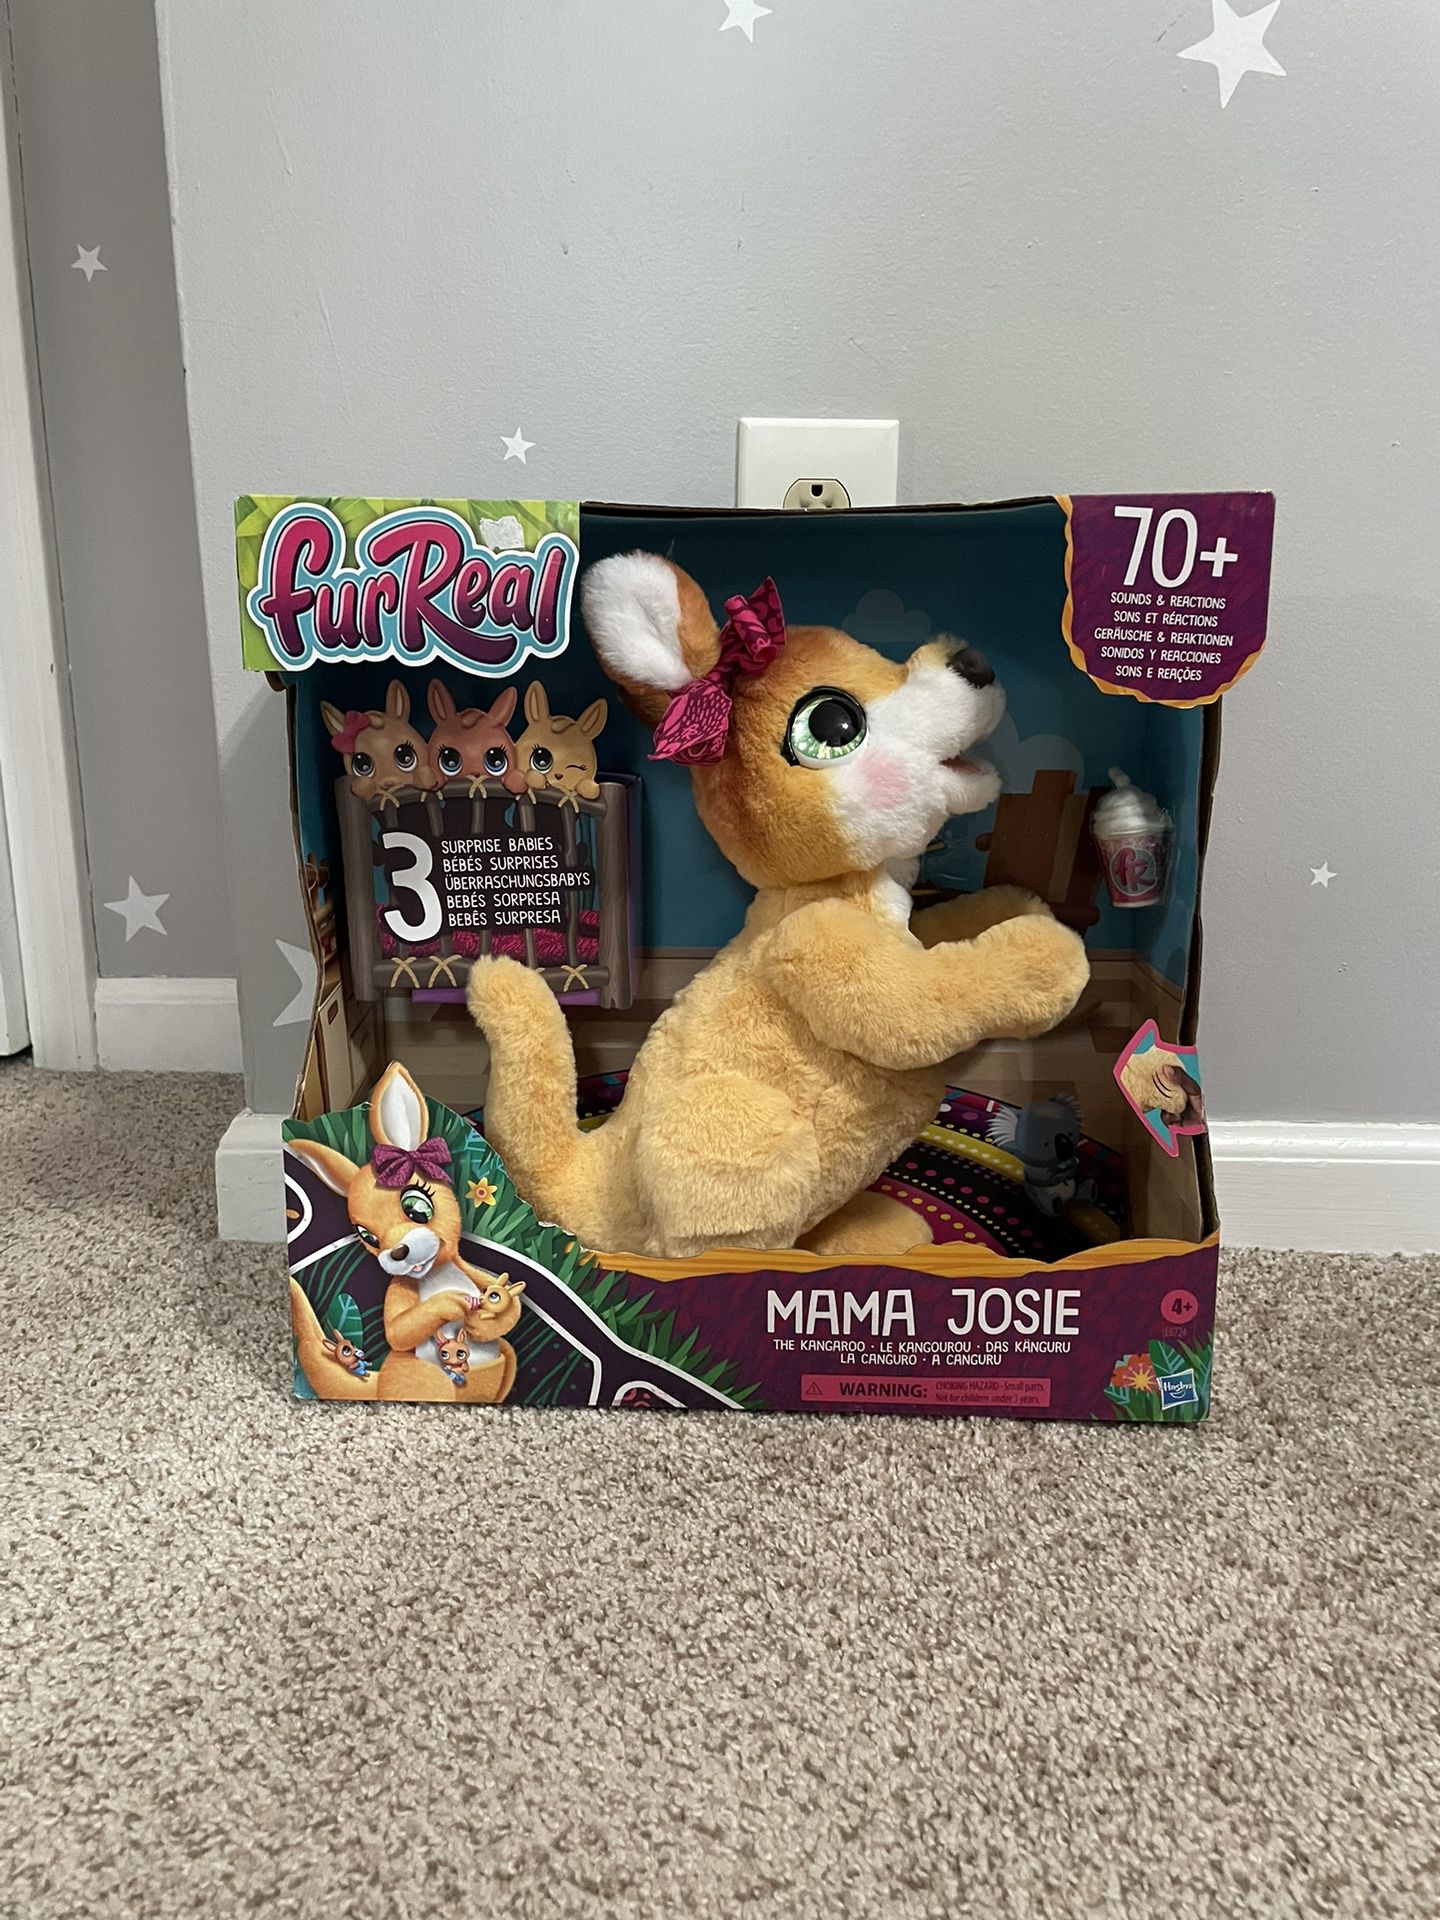 FurReal friends Mama Josie The Kangaroo Interactive Pet Toy, 70+ Sounds & Reactions